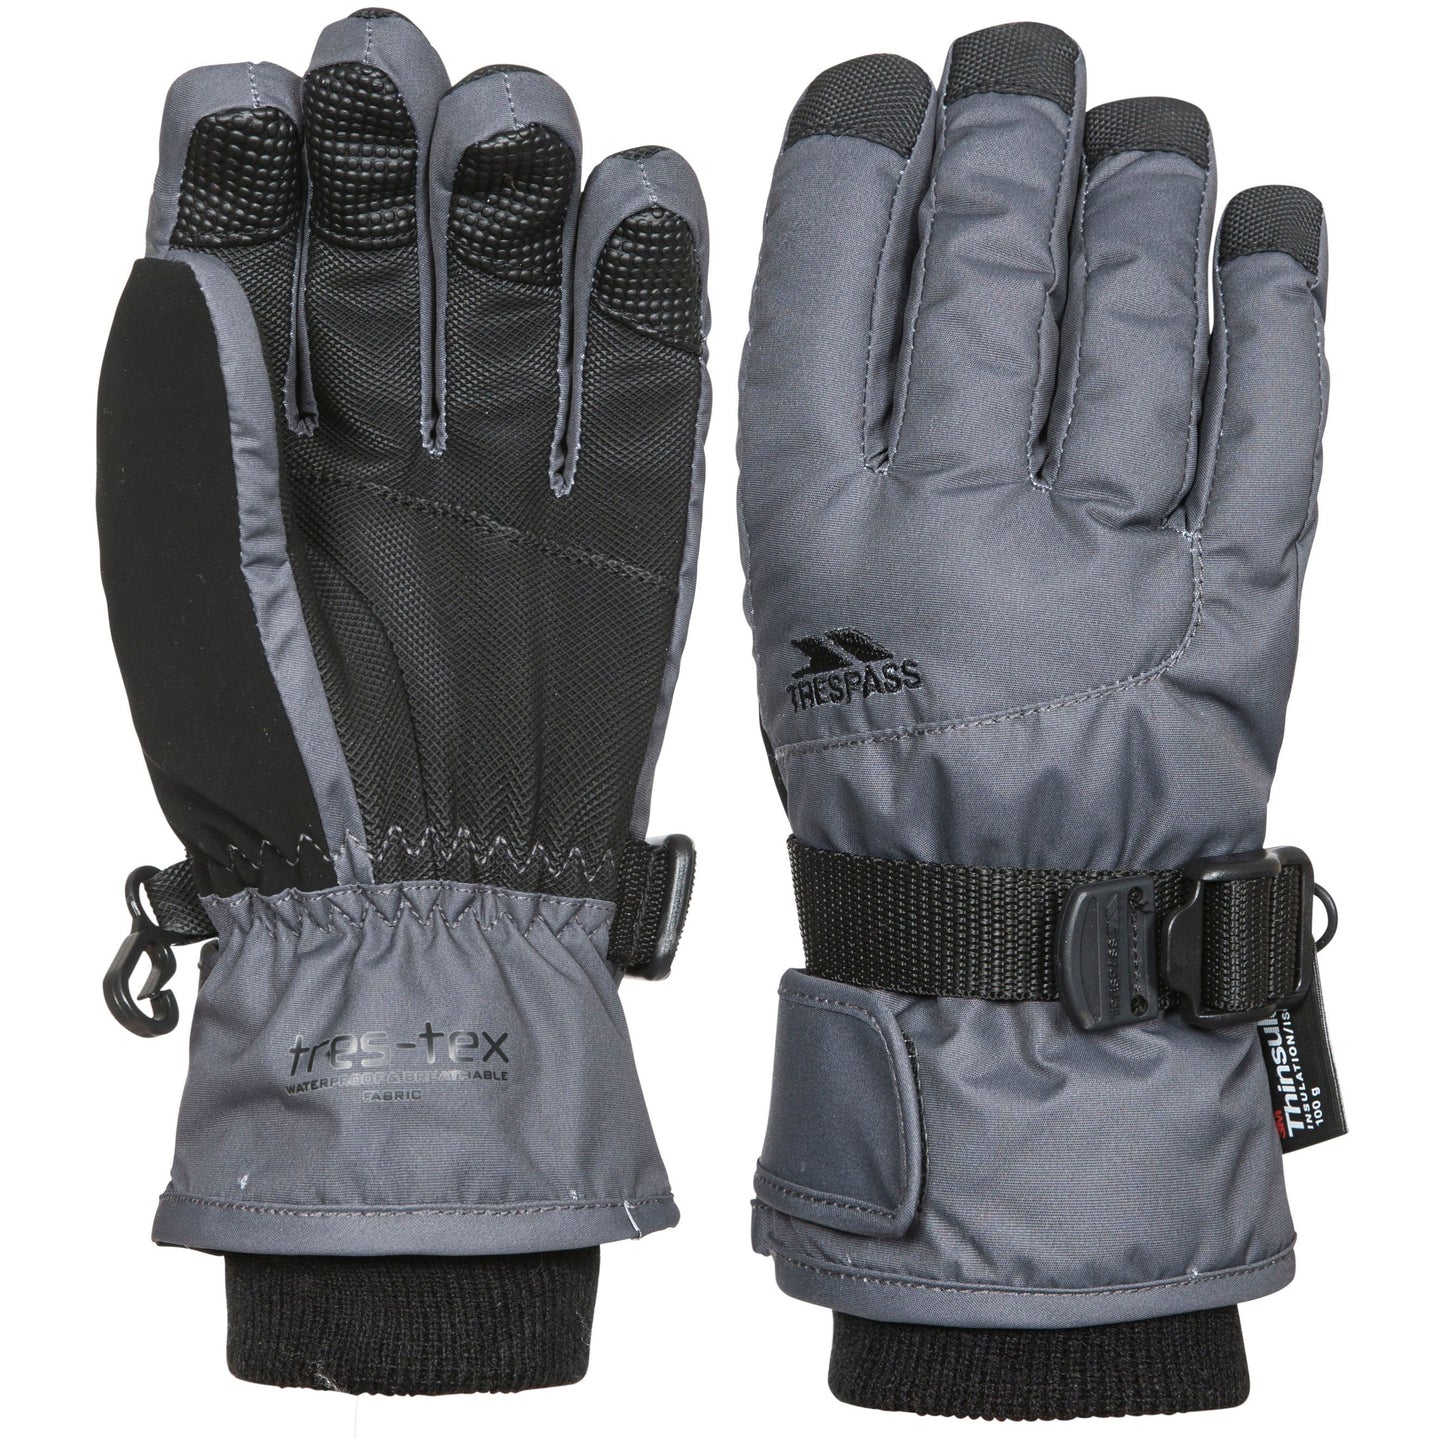 Ergon 2 - Unisex Youths Ski Gloves - Carbon